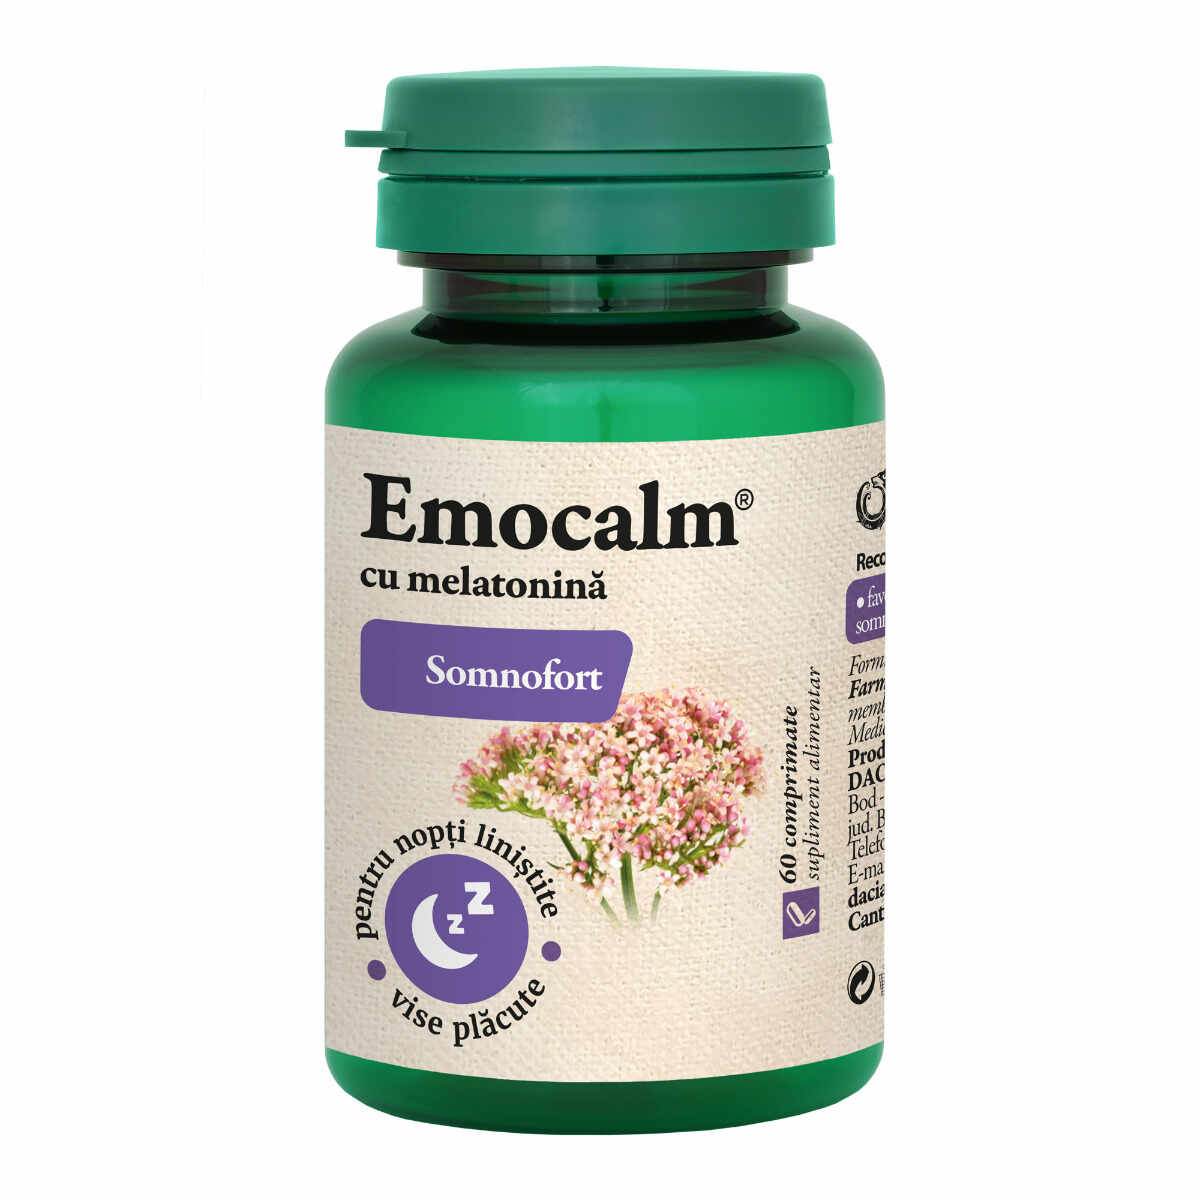 Emocalm cu melatonina comprimate Somnofort 